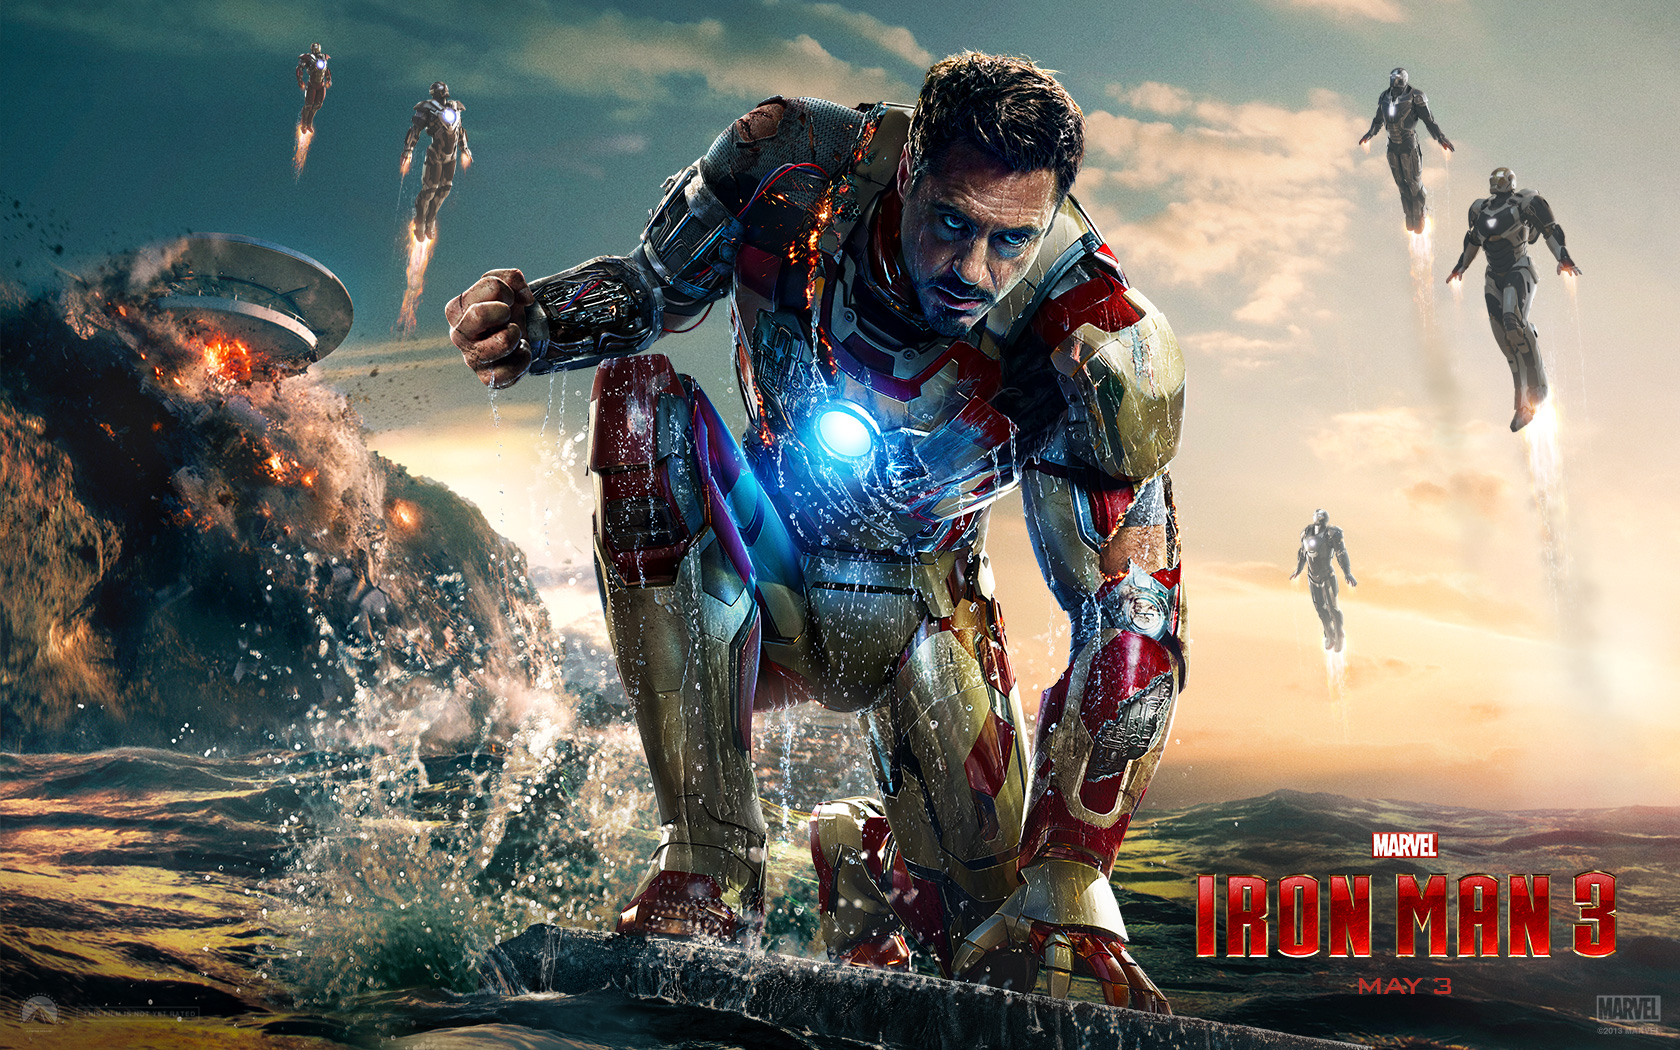 Iron Man 3 – BluRay Review